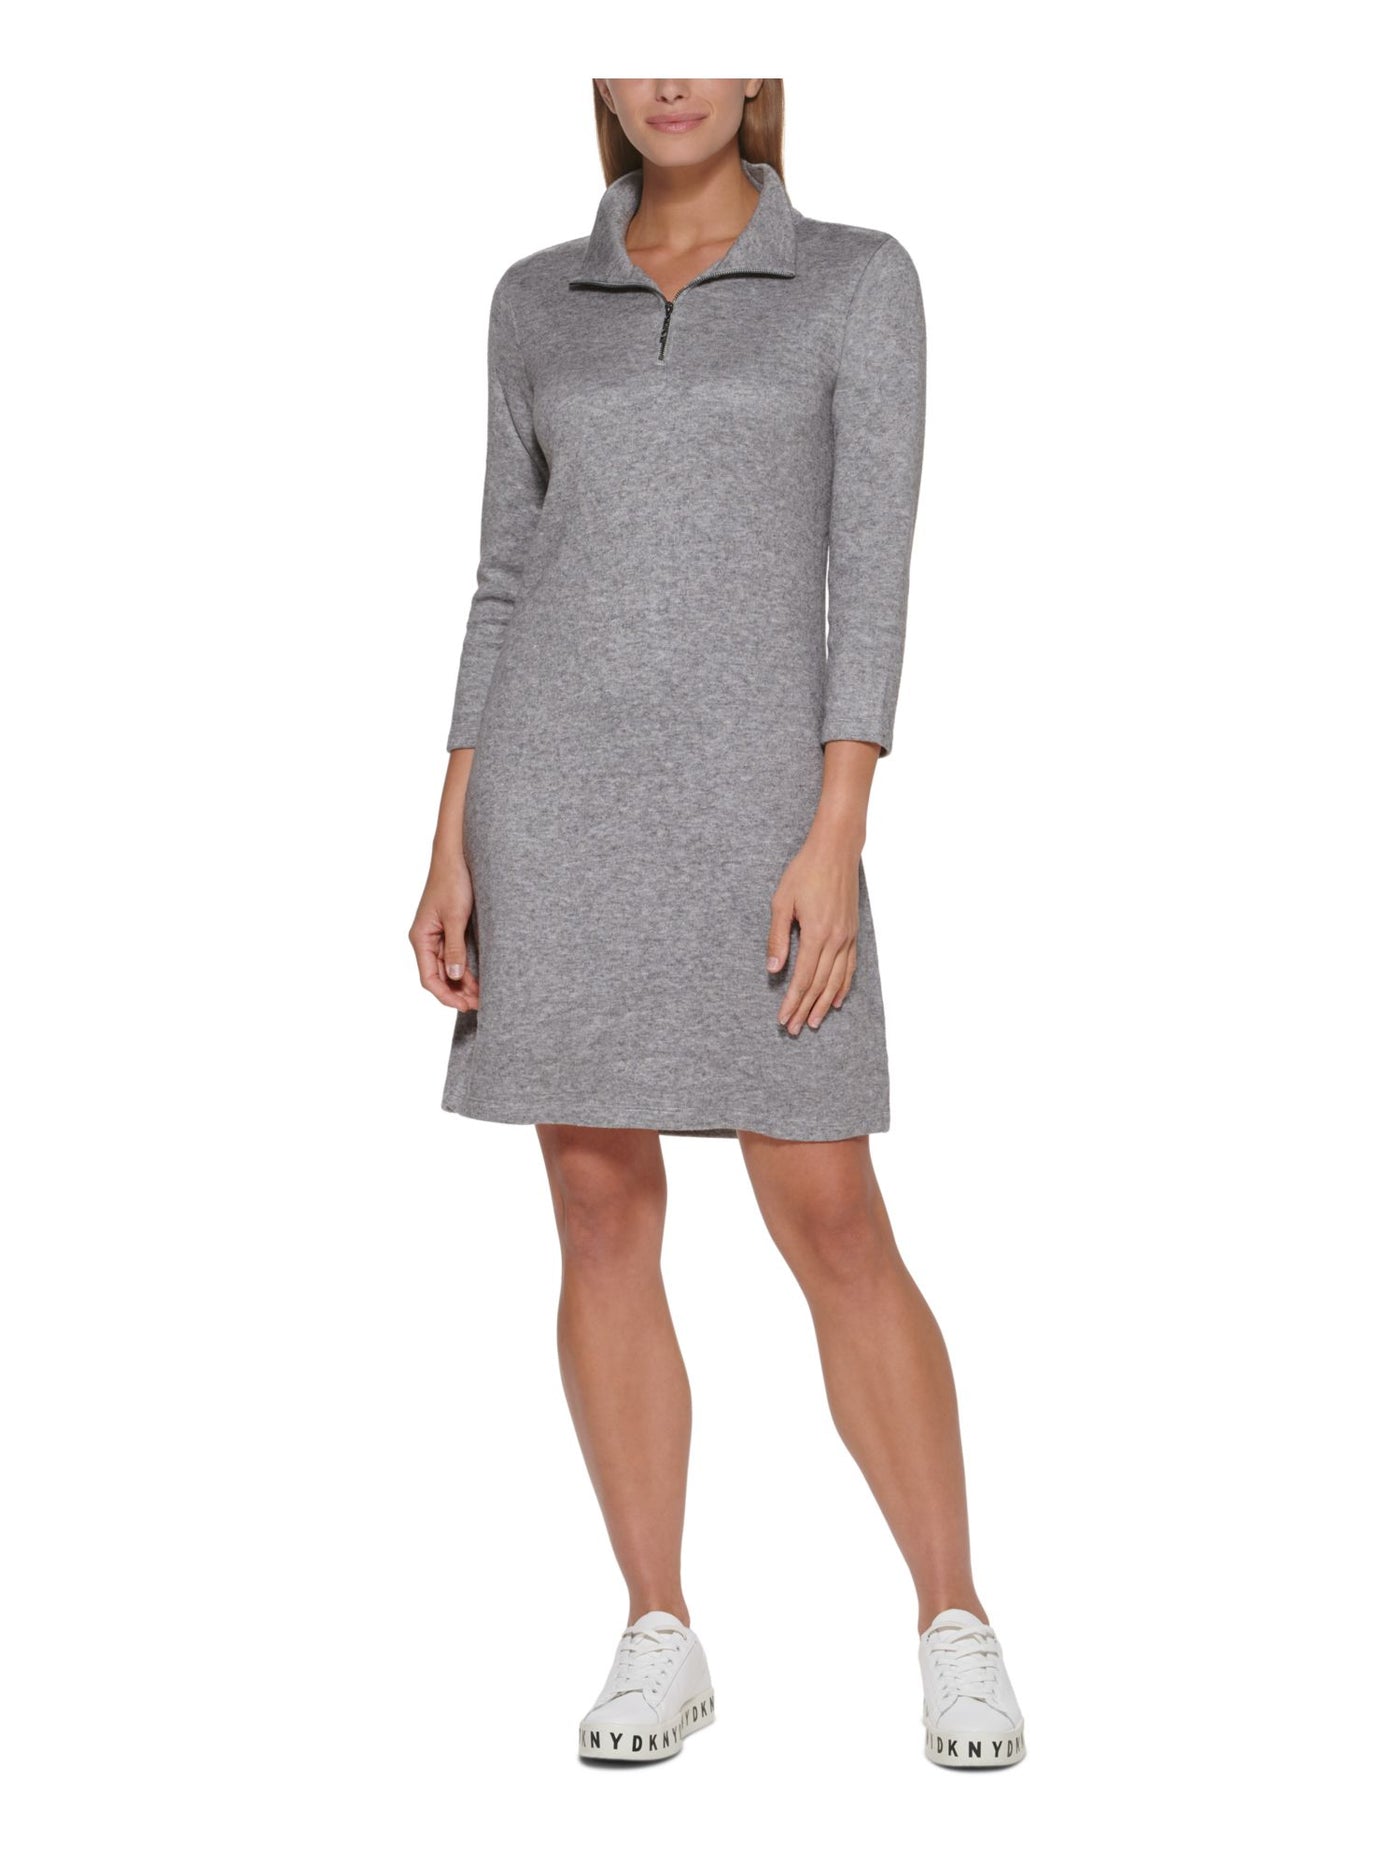 DKNY Womens Gray Heather Long Sleeve Mock Neck Above The Knee Sweater Dress L